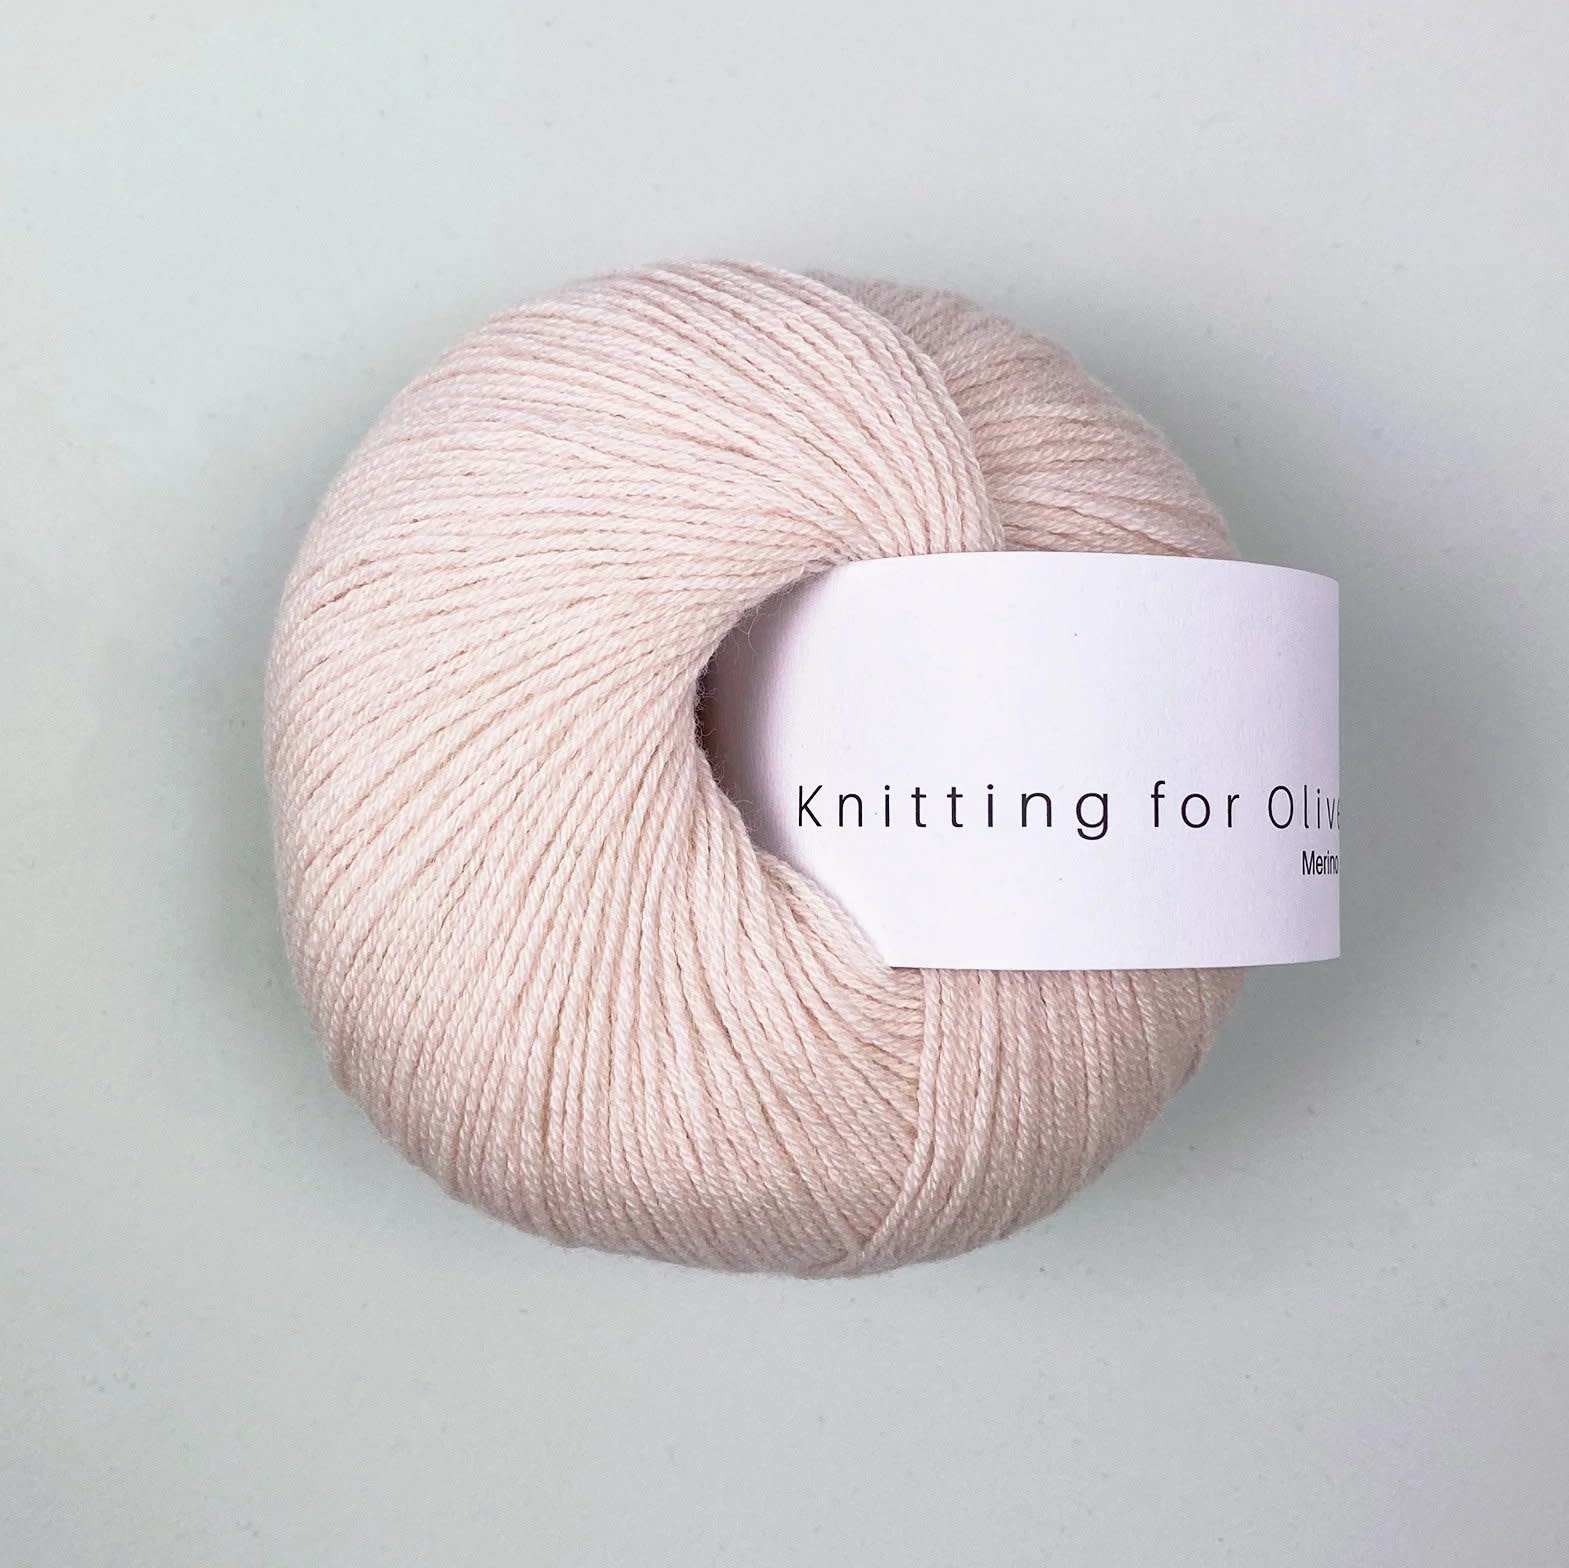 Knitting for Olive Merino - Soft Peach